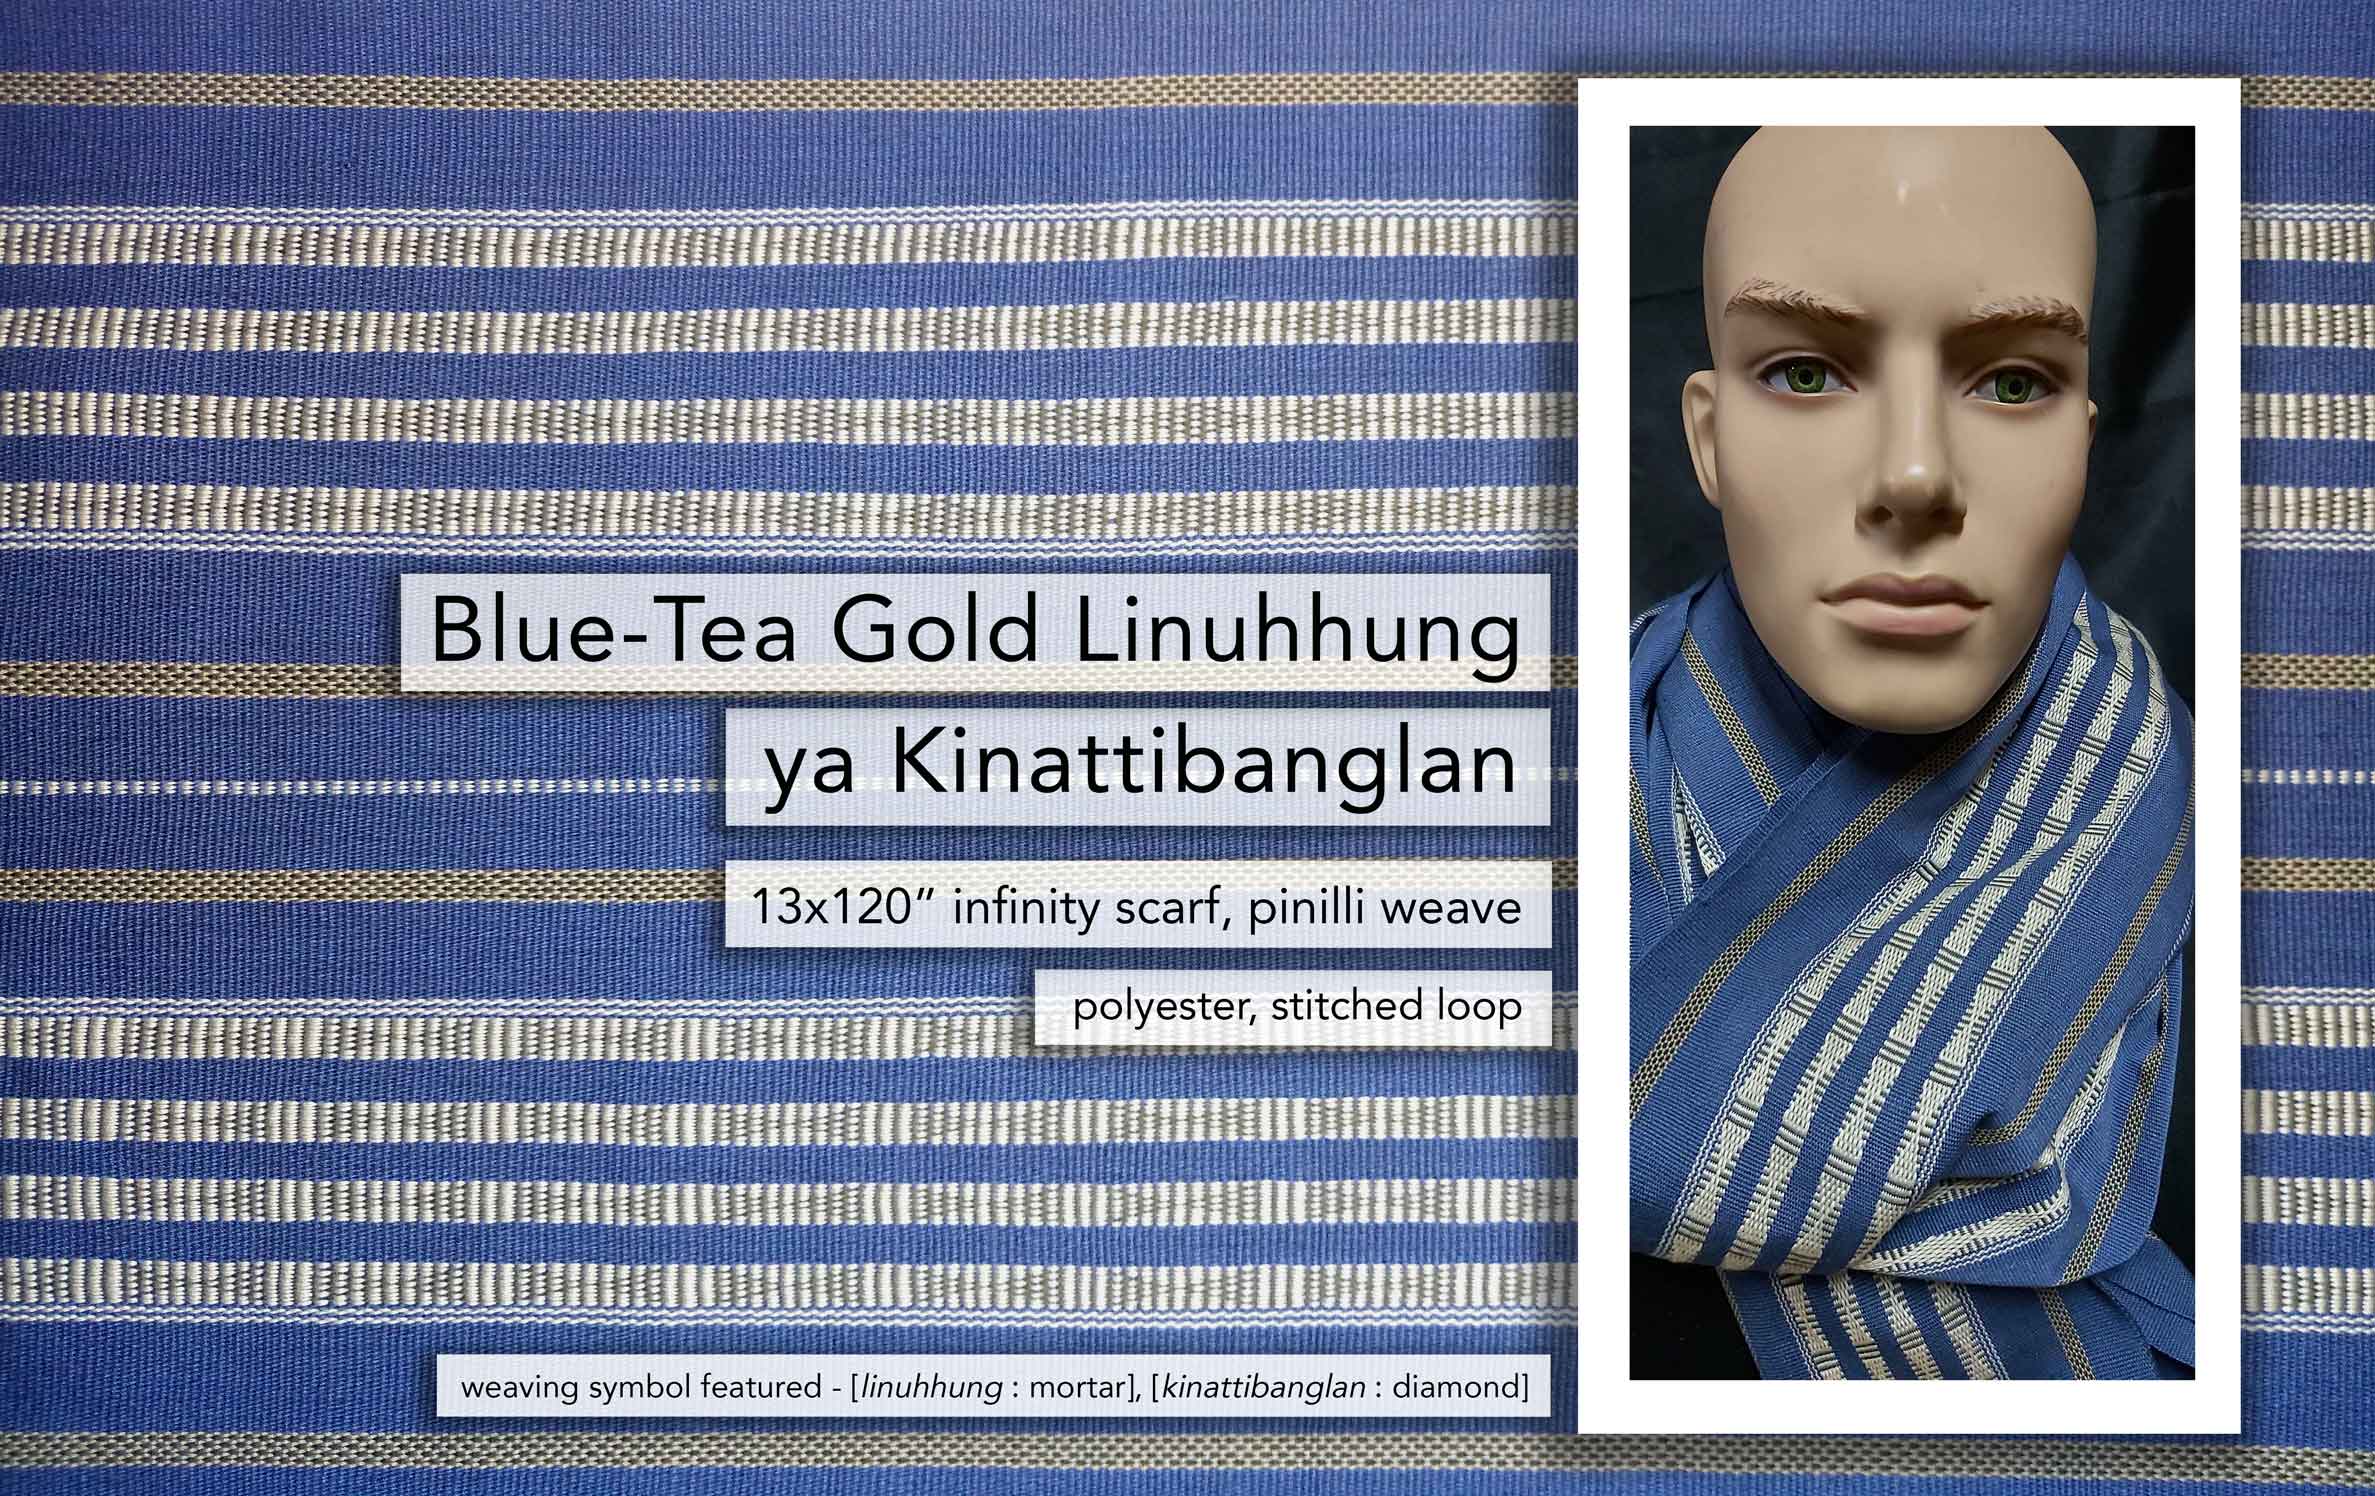 Blue-Tea Gold Linuhhung ya Kinattibanglan